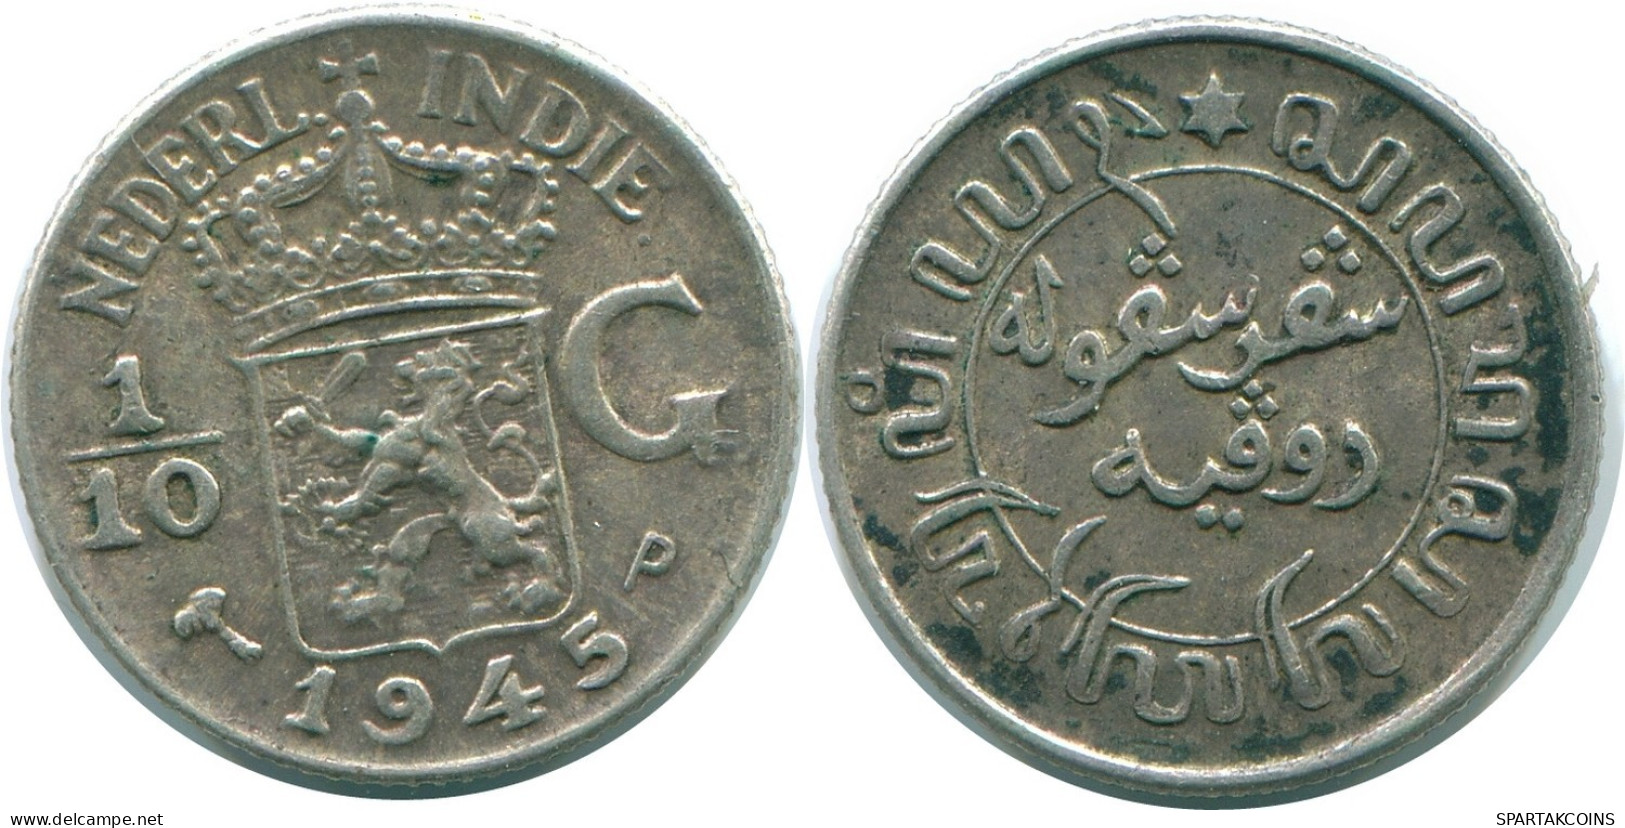 1/10 GULDEN 1945 P NETHERLANDS EAST INDIES SILVER Colonial Coin #NL14194.3.U.A - Indes Néerlandaises